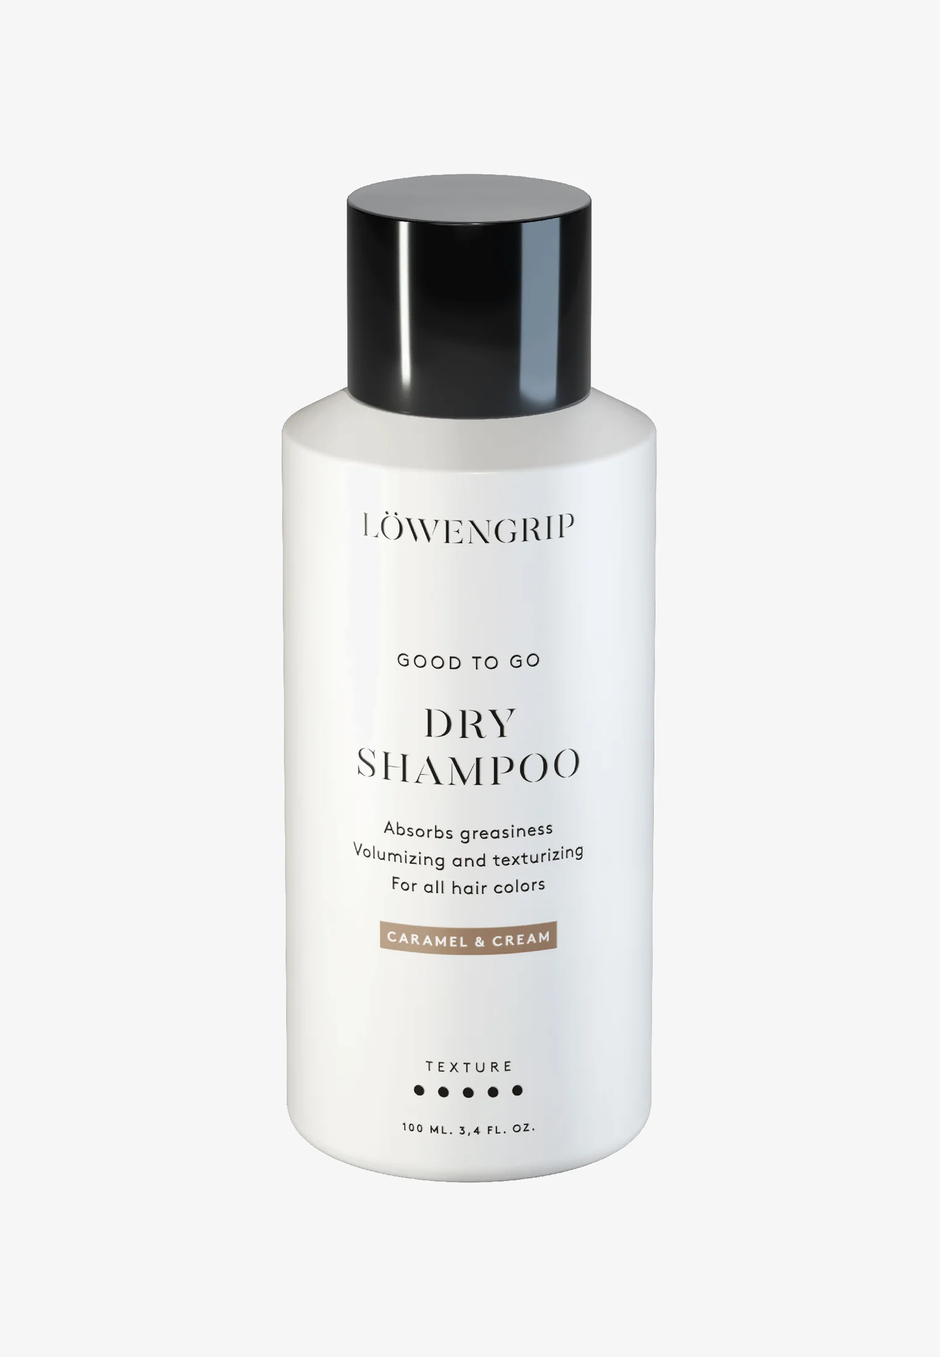 Foto: Pr, Lowengrip, šampon za suho pranje  (10,95 eura) | Autor: 